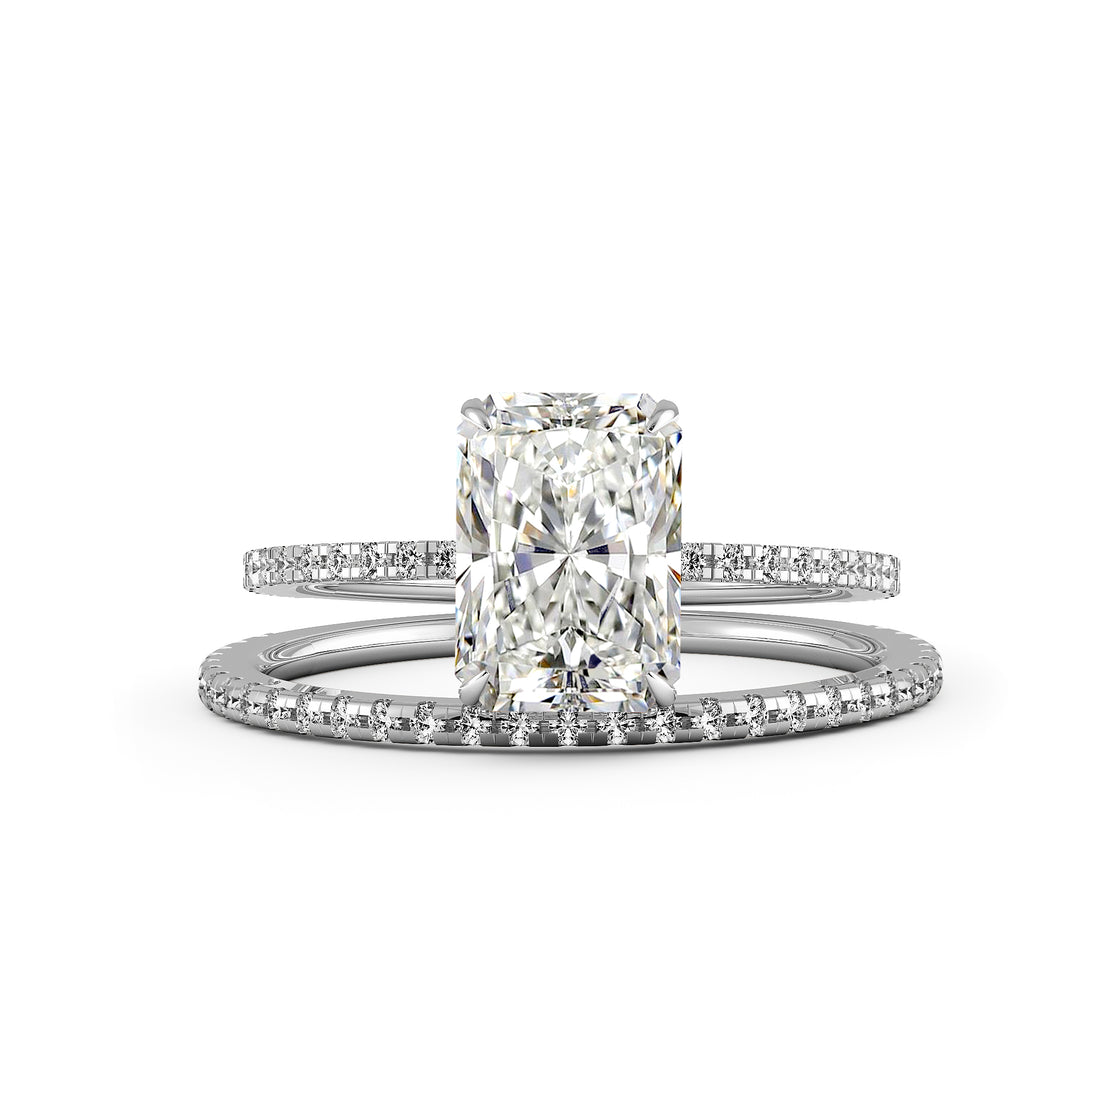 Elongated Radiant Cut Hidden Halo Pave Engagement Ring Bridal Set - 605